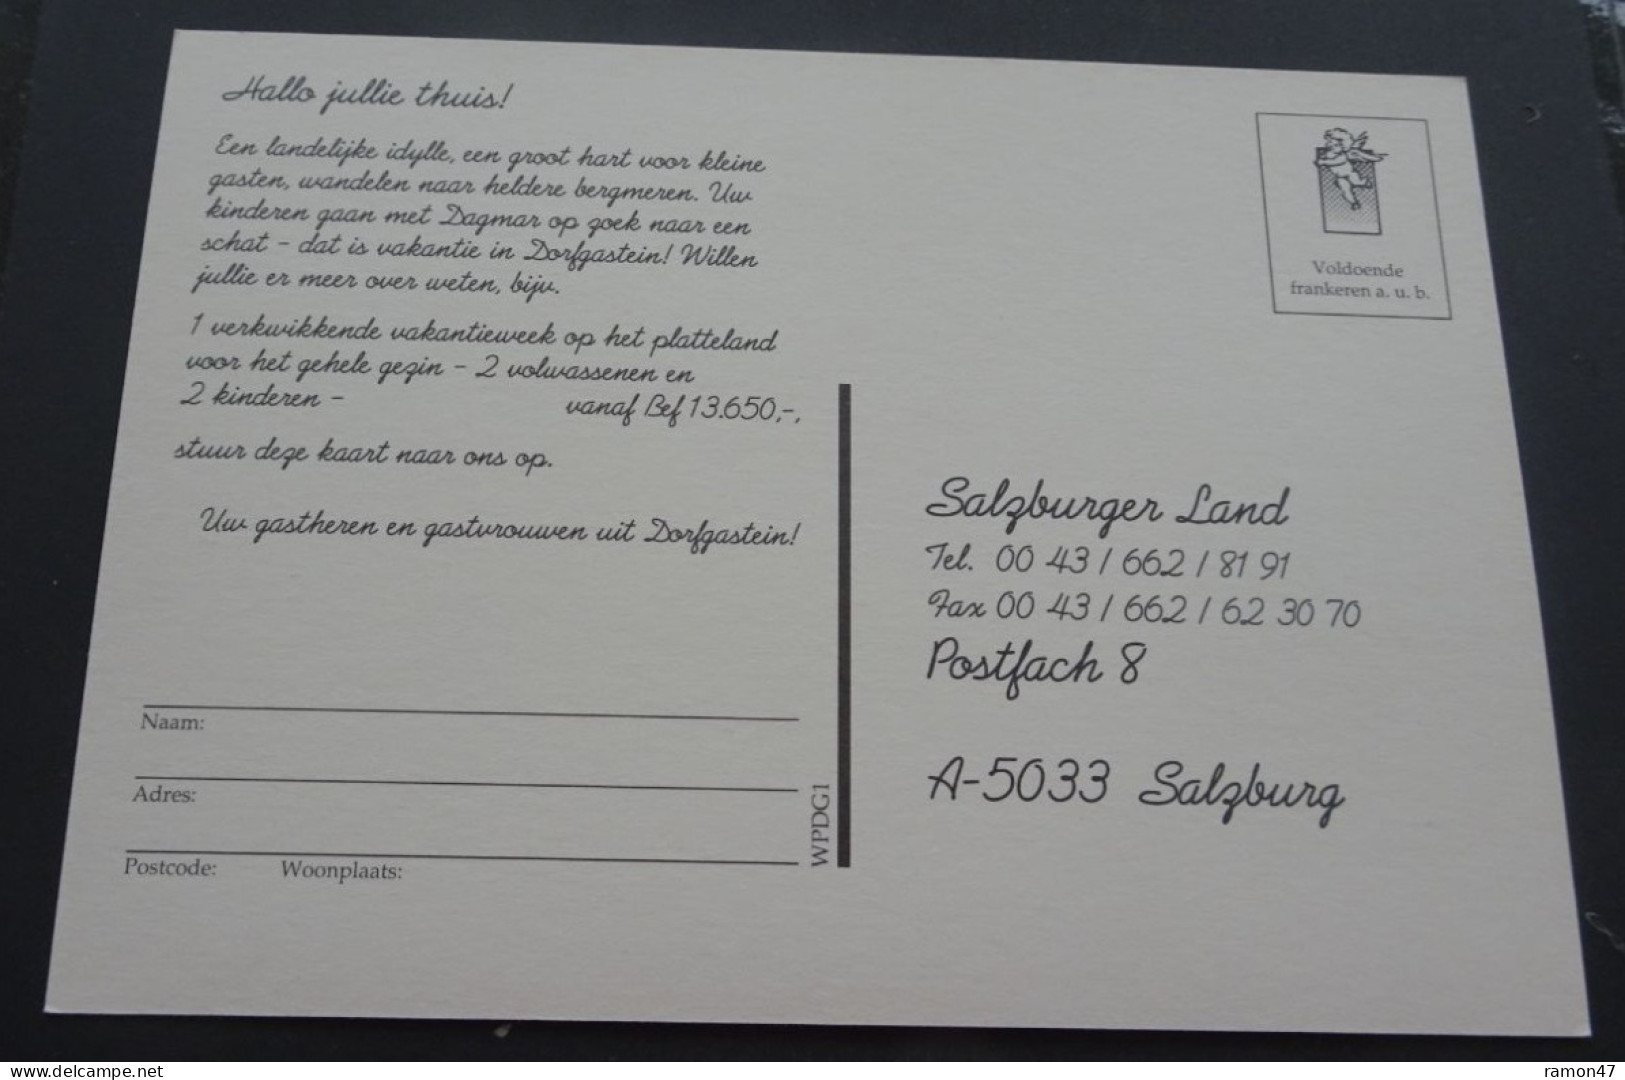 Salzburgerland - Dorfgastein - Kom, Kijk En Blijf - Leven Op Het Platteland - St. Johann Im Pongau